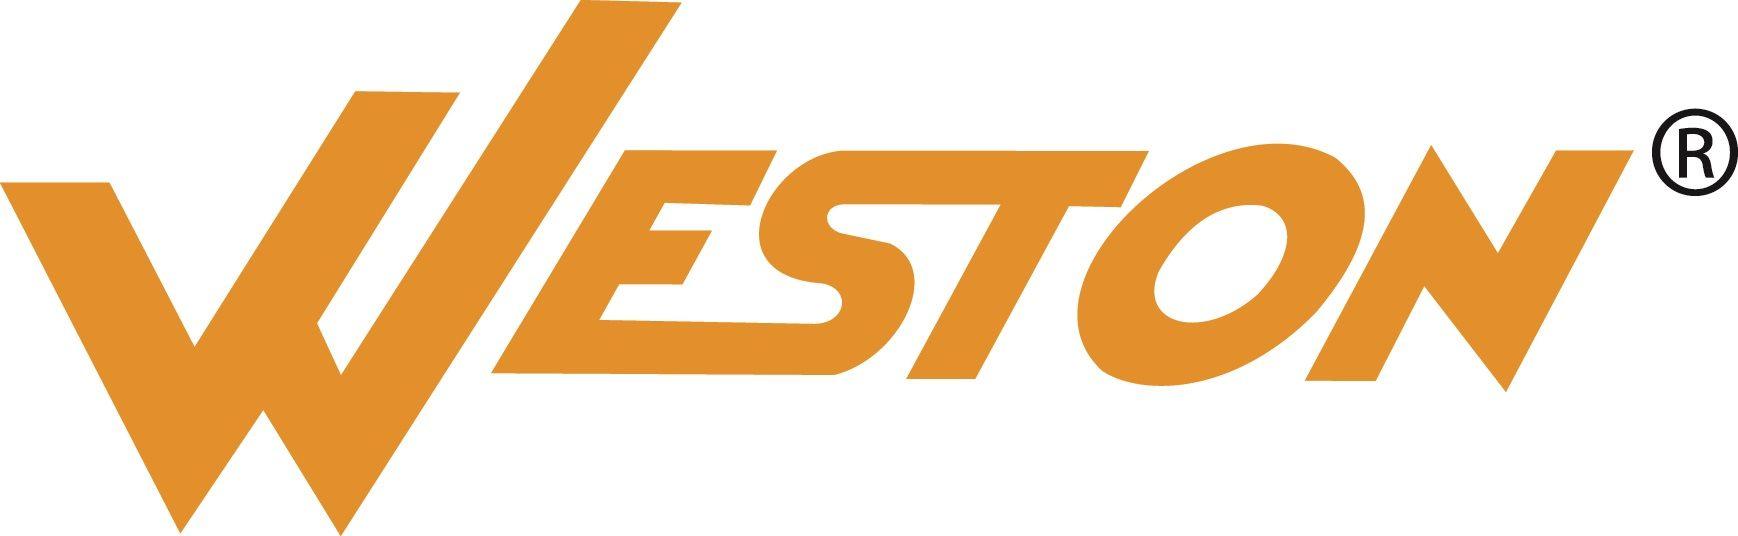 Weston Logo - Weston Logo | Branded Logos | Logos, Logo branding, The originals